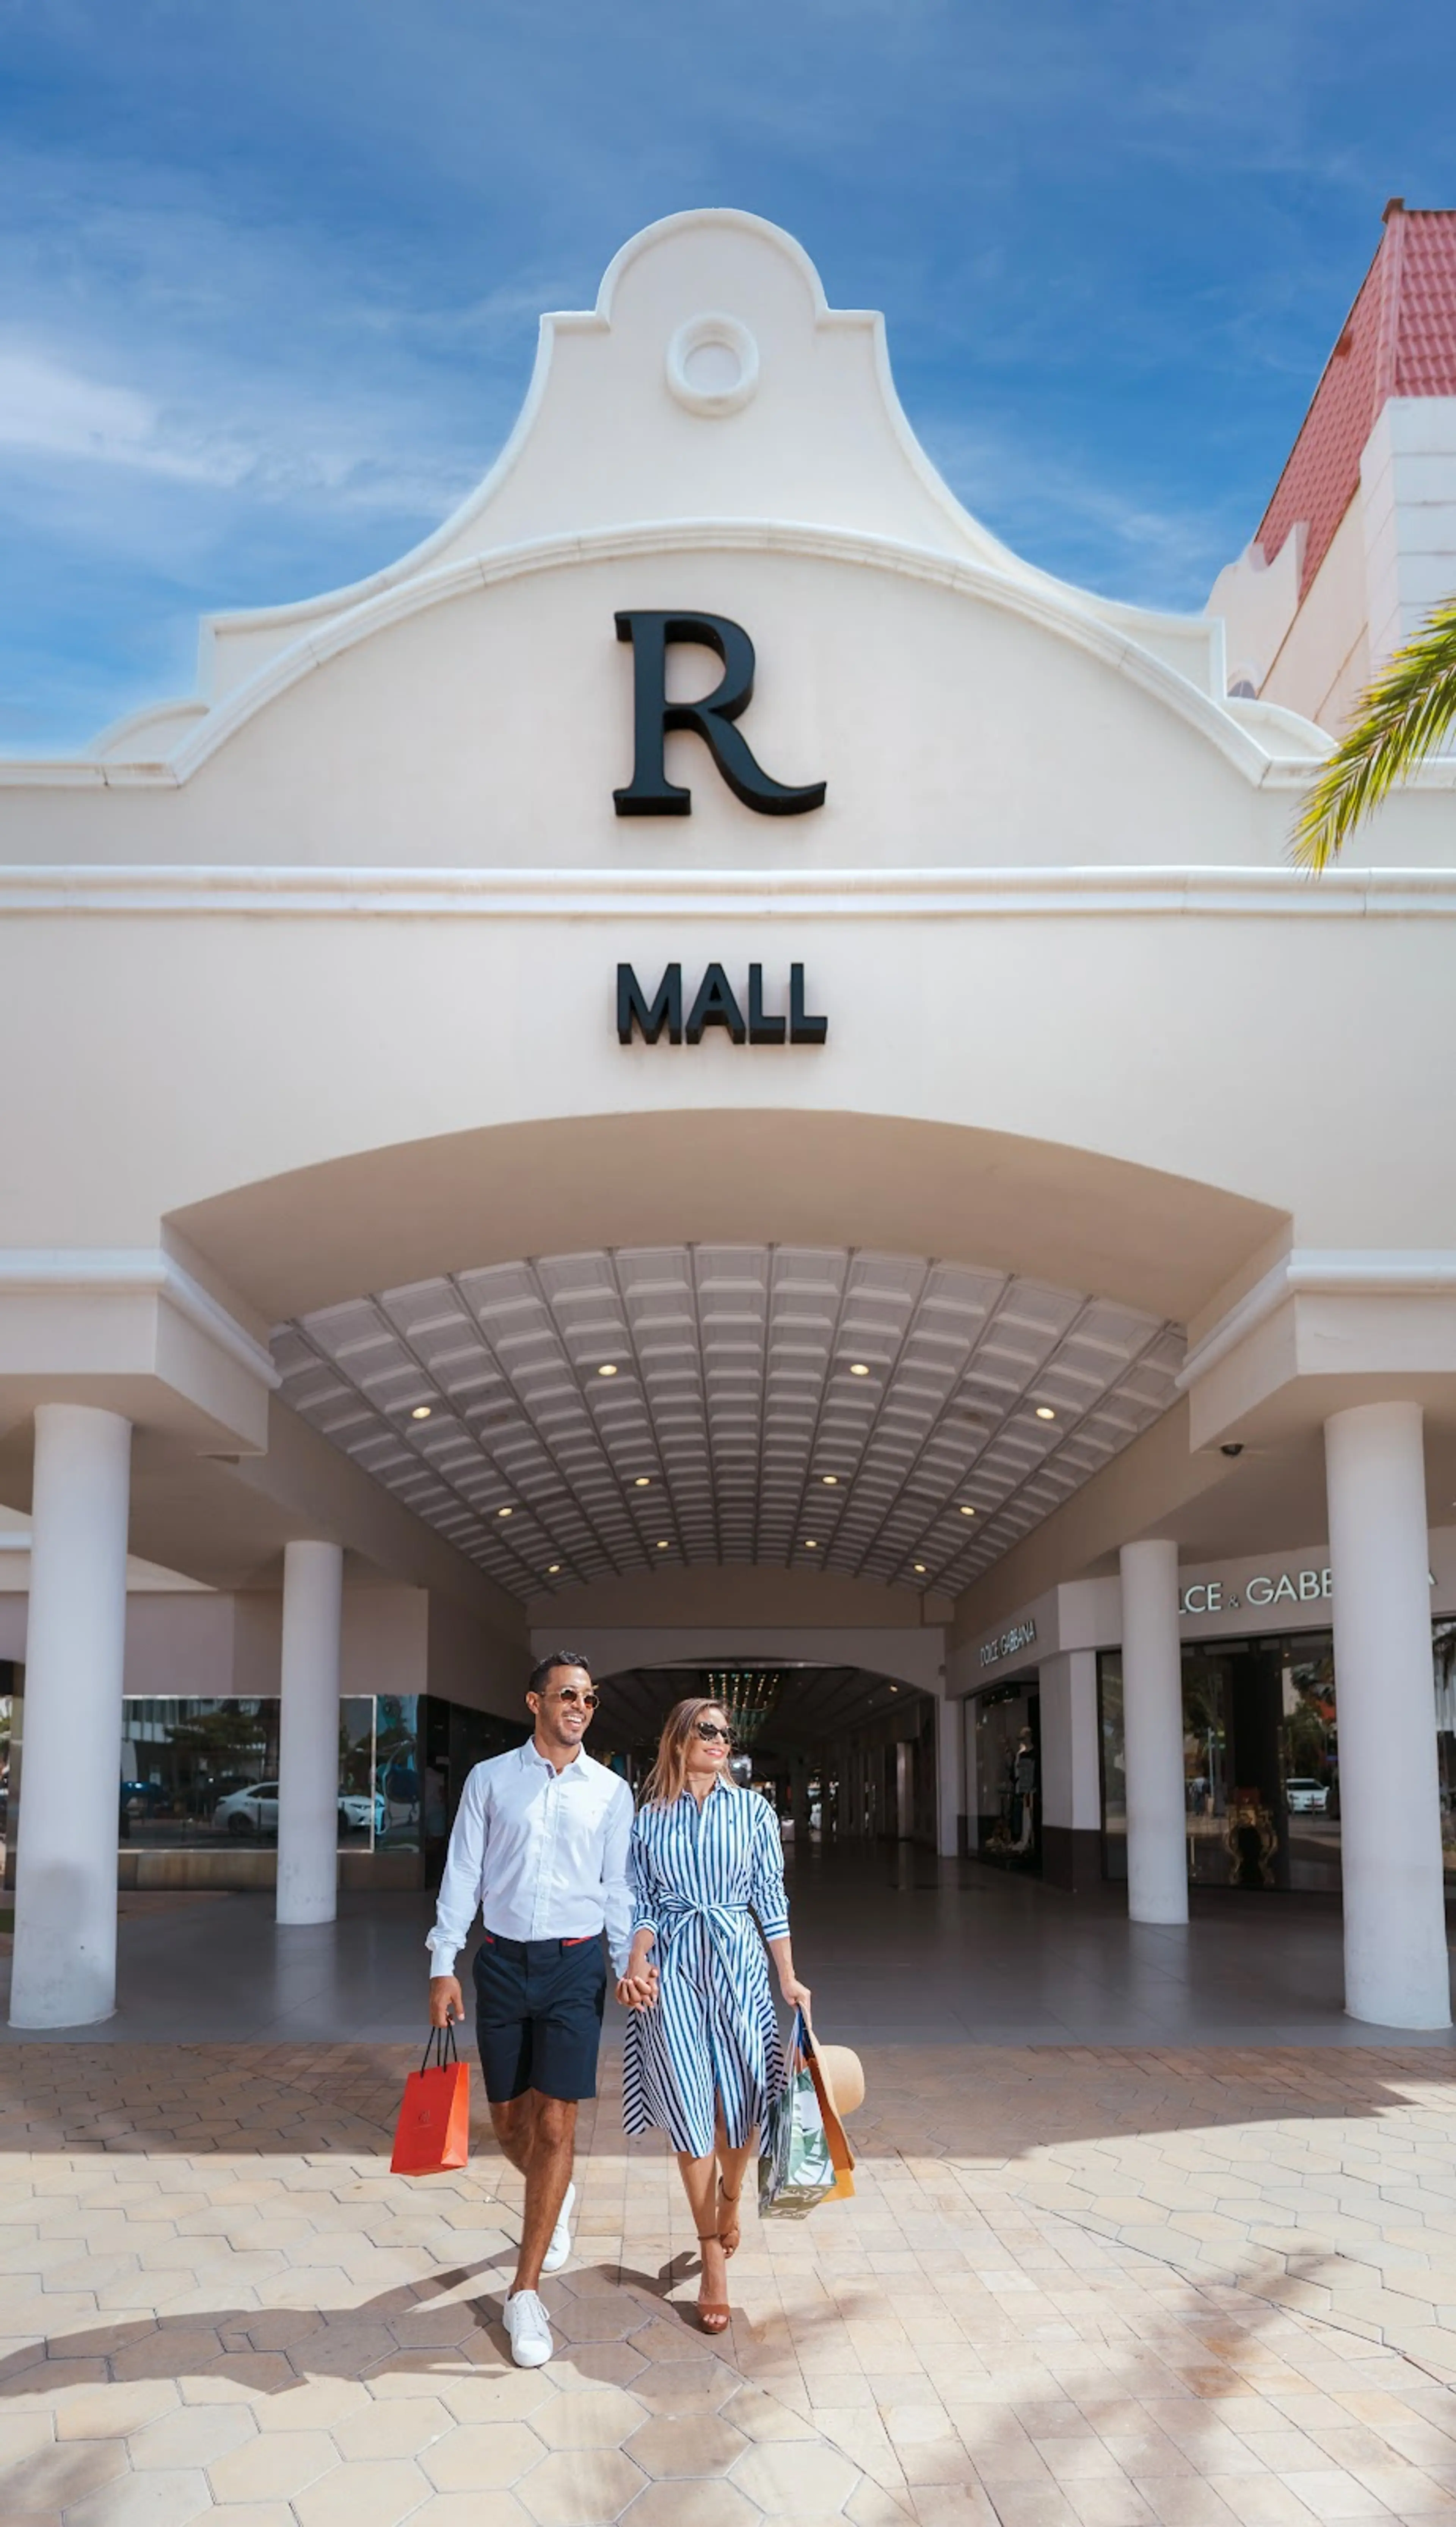 Renaissance Mall